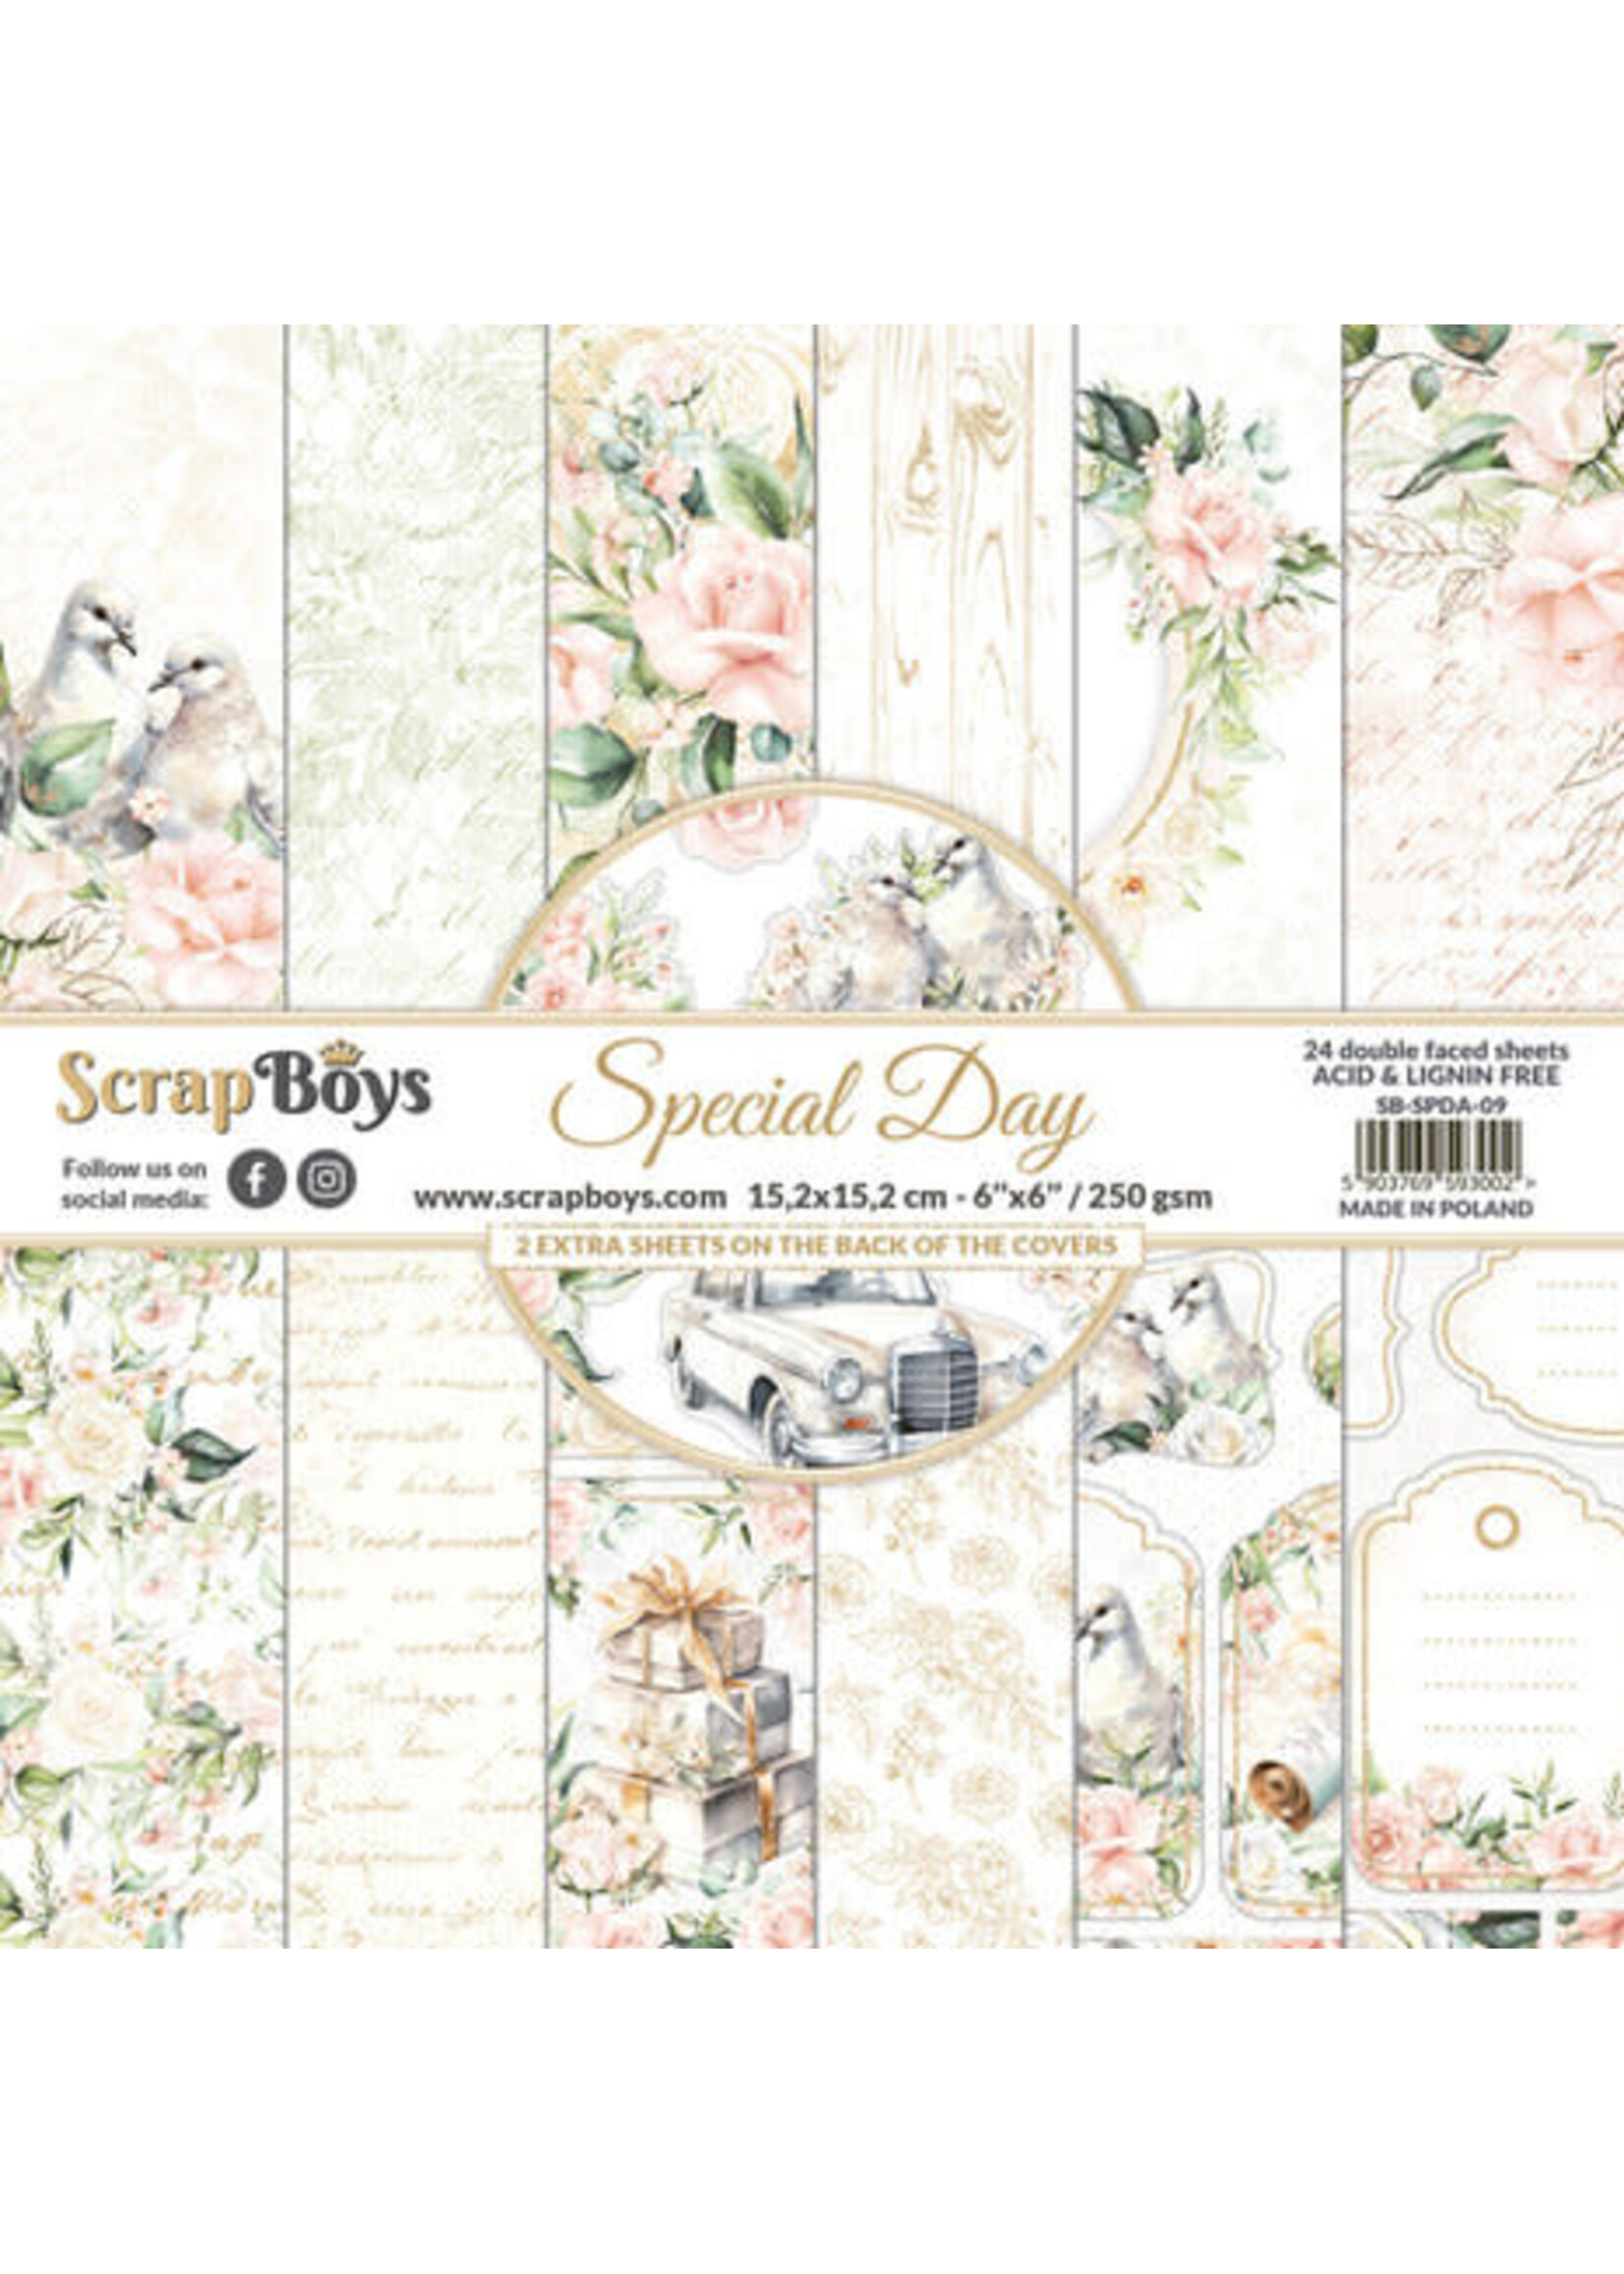 Scrapboys Special Day 6x6 Inch Paper Pad (SB-SPDA-09)